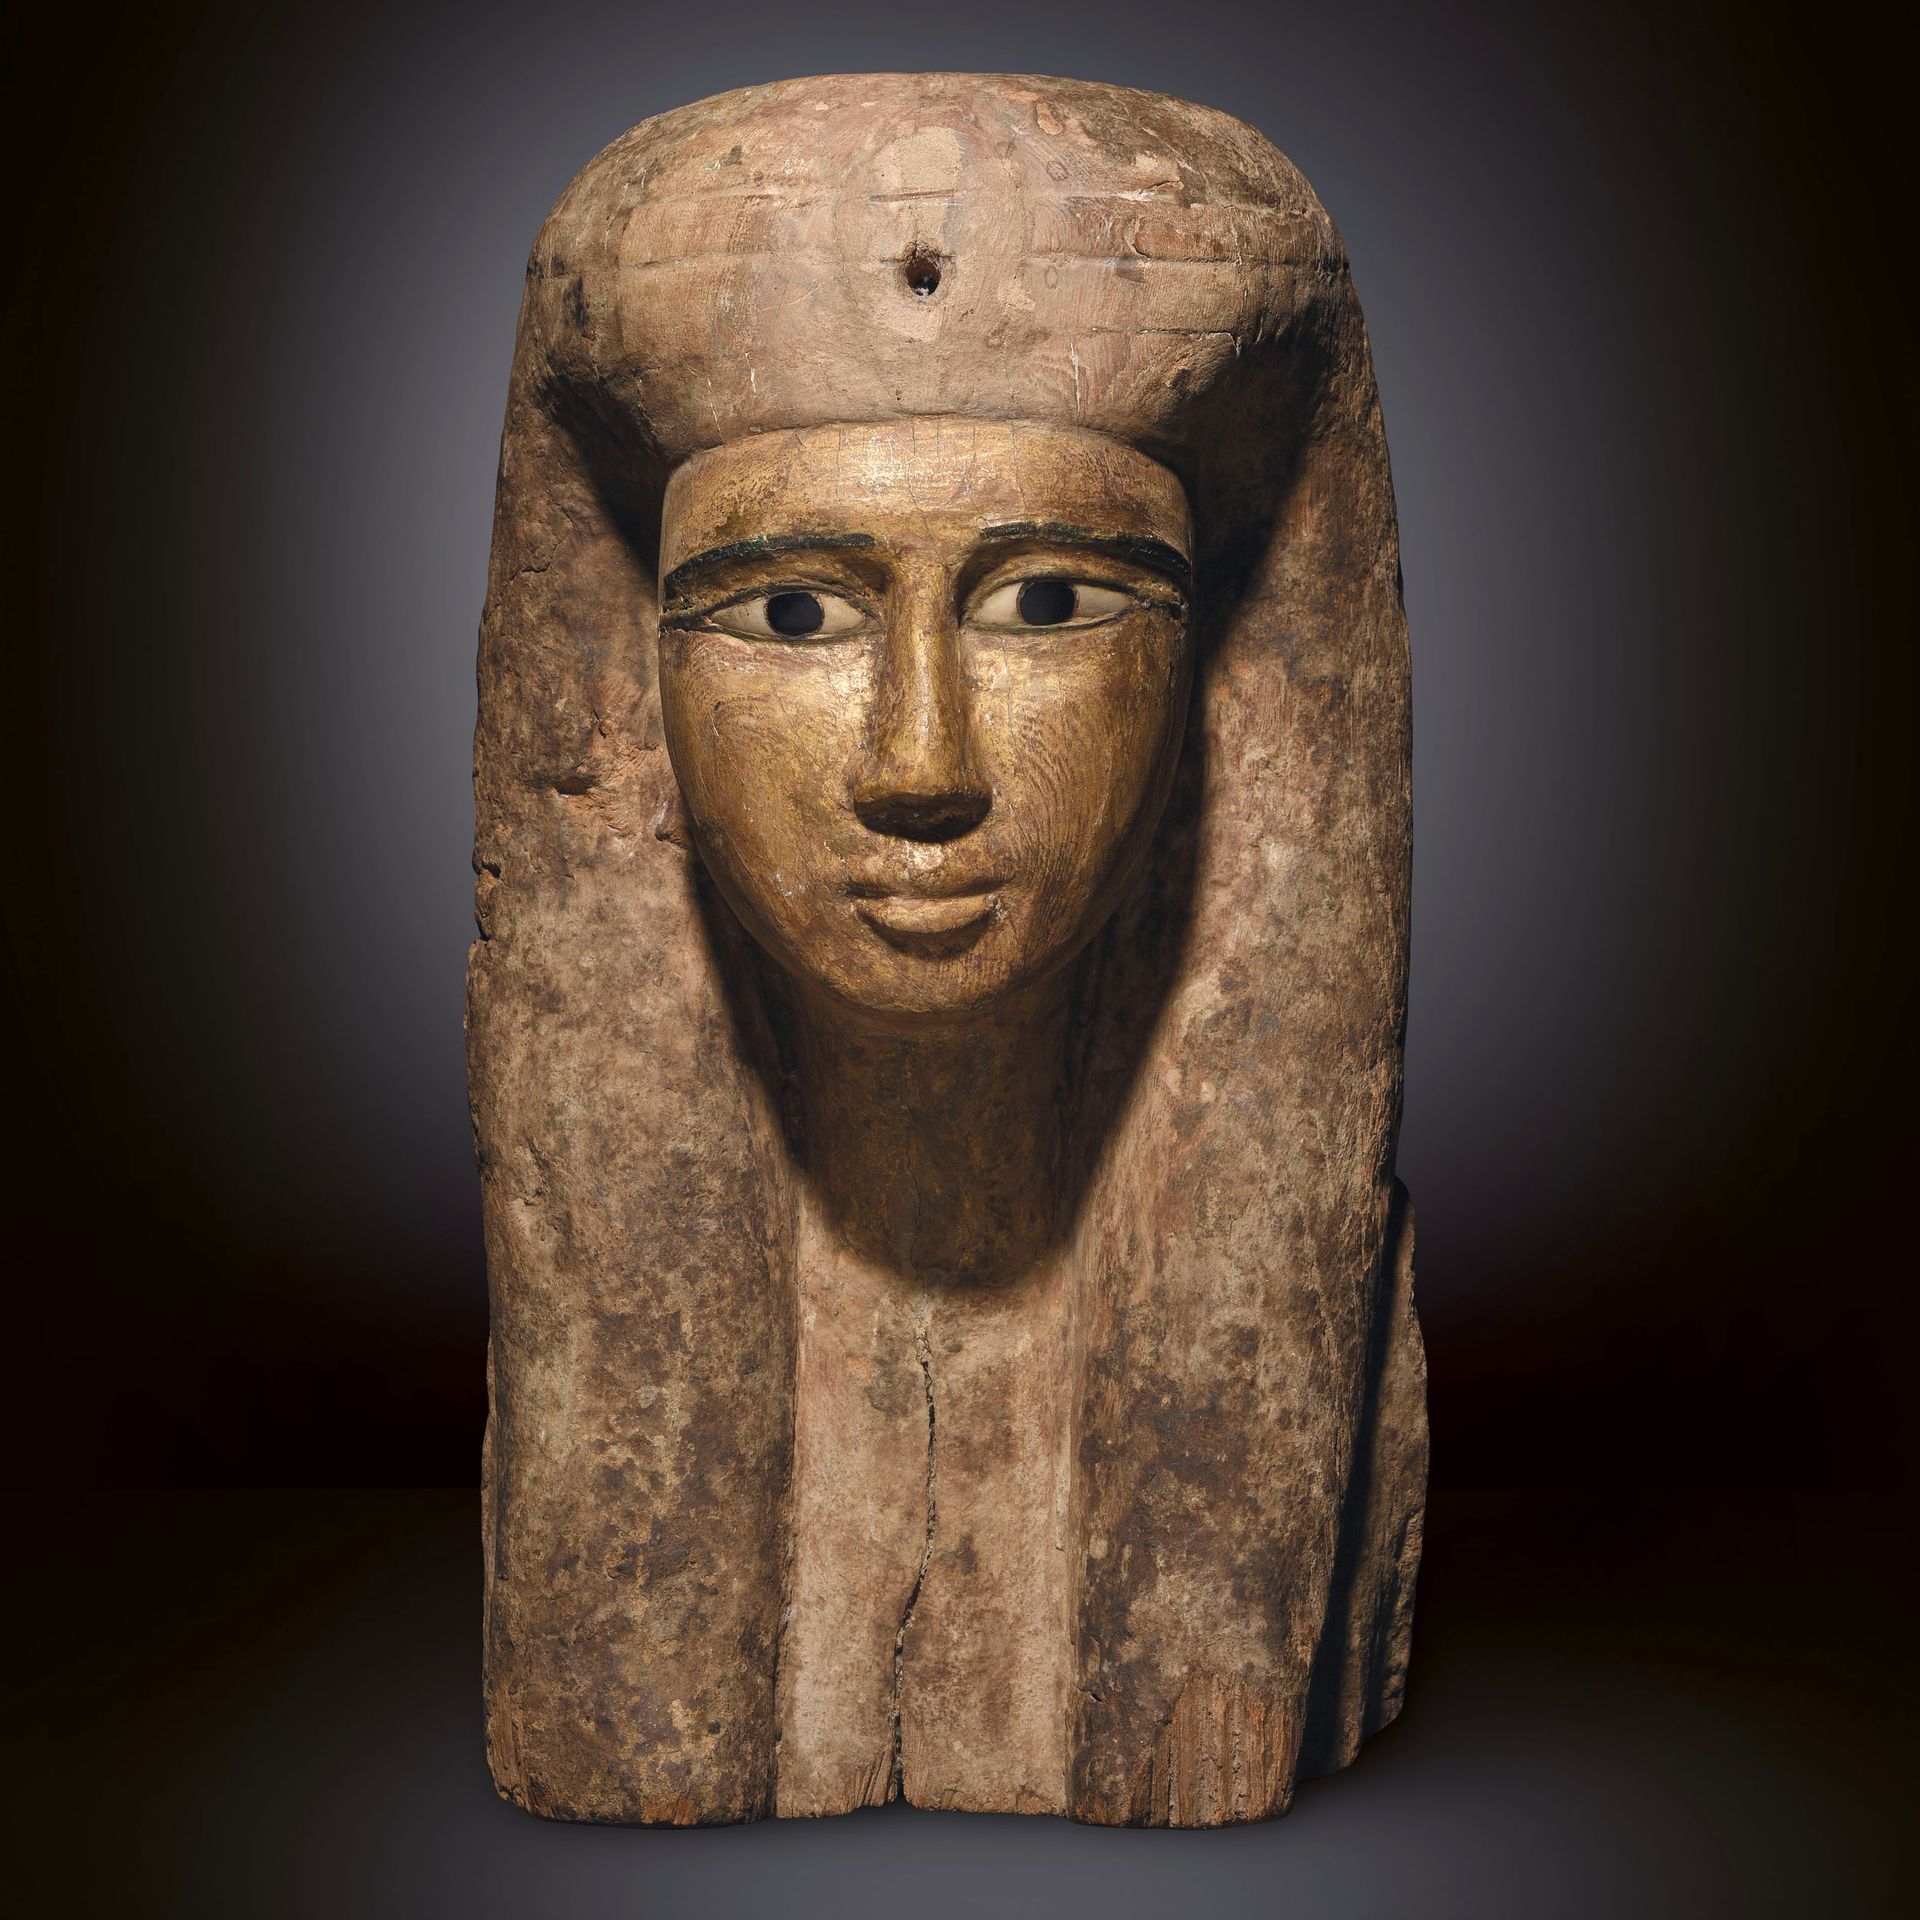 Null BUSTE DE REINE

Egypte, période ptolémaïque, 332-30 av. J.-C.

Bois avec tr&hellip;